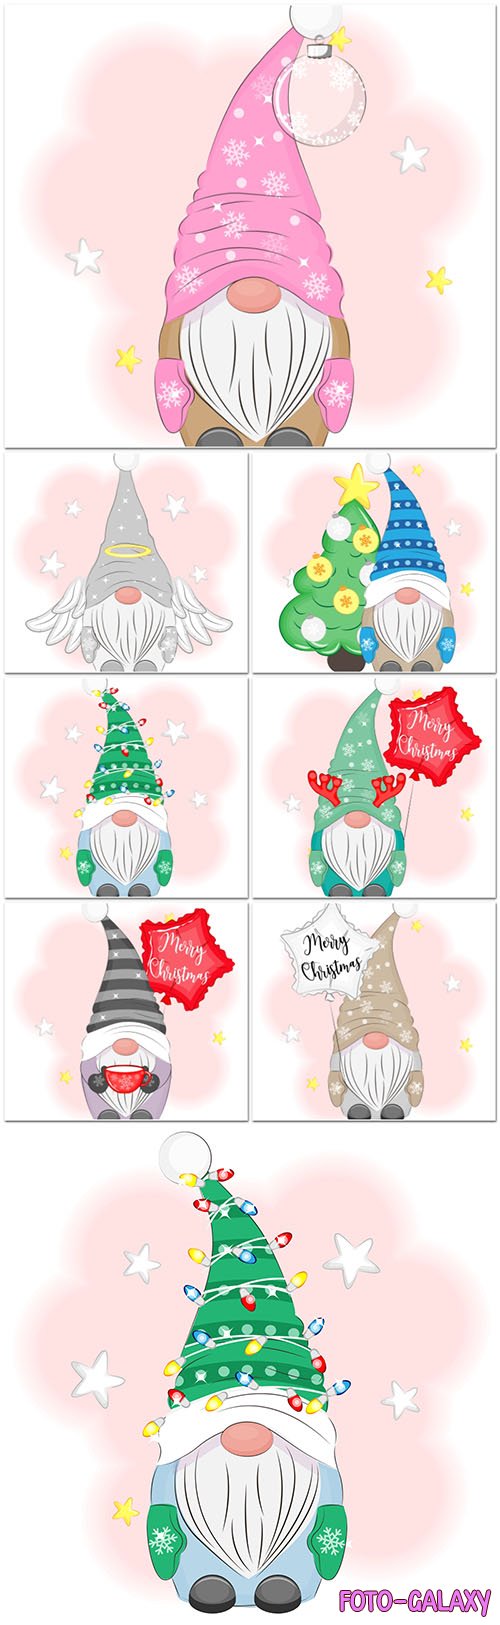 Cute gnome christmas vector illustration